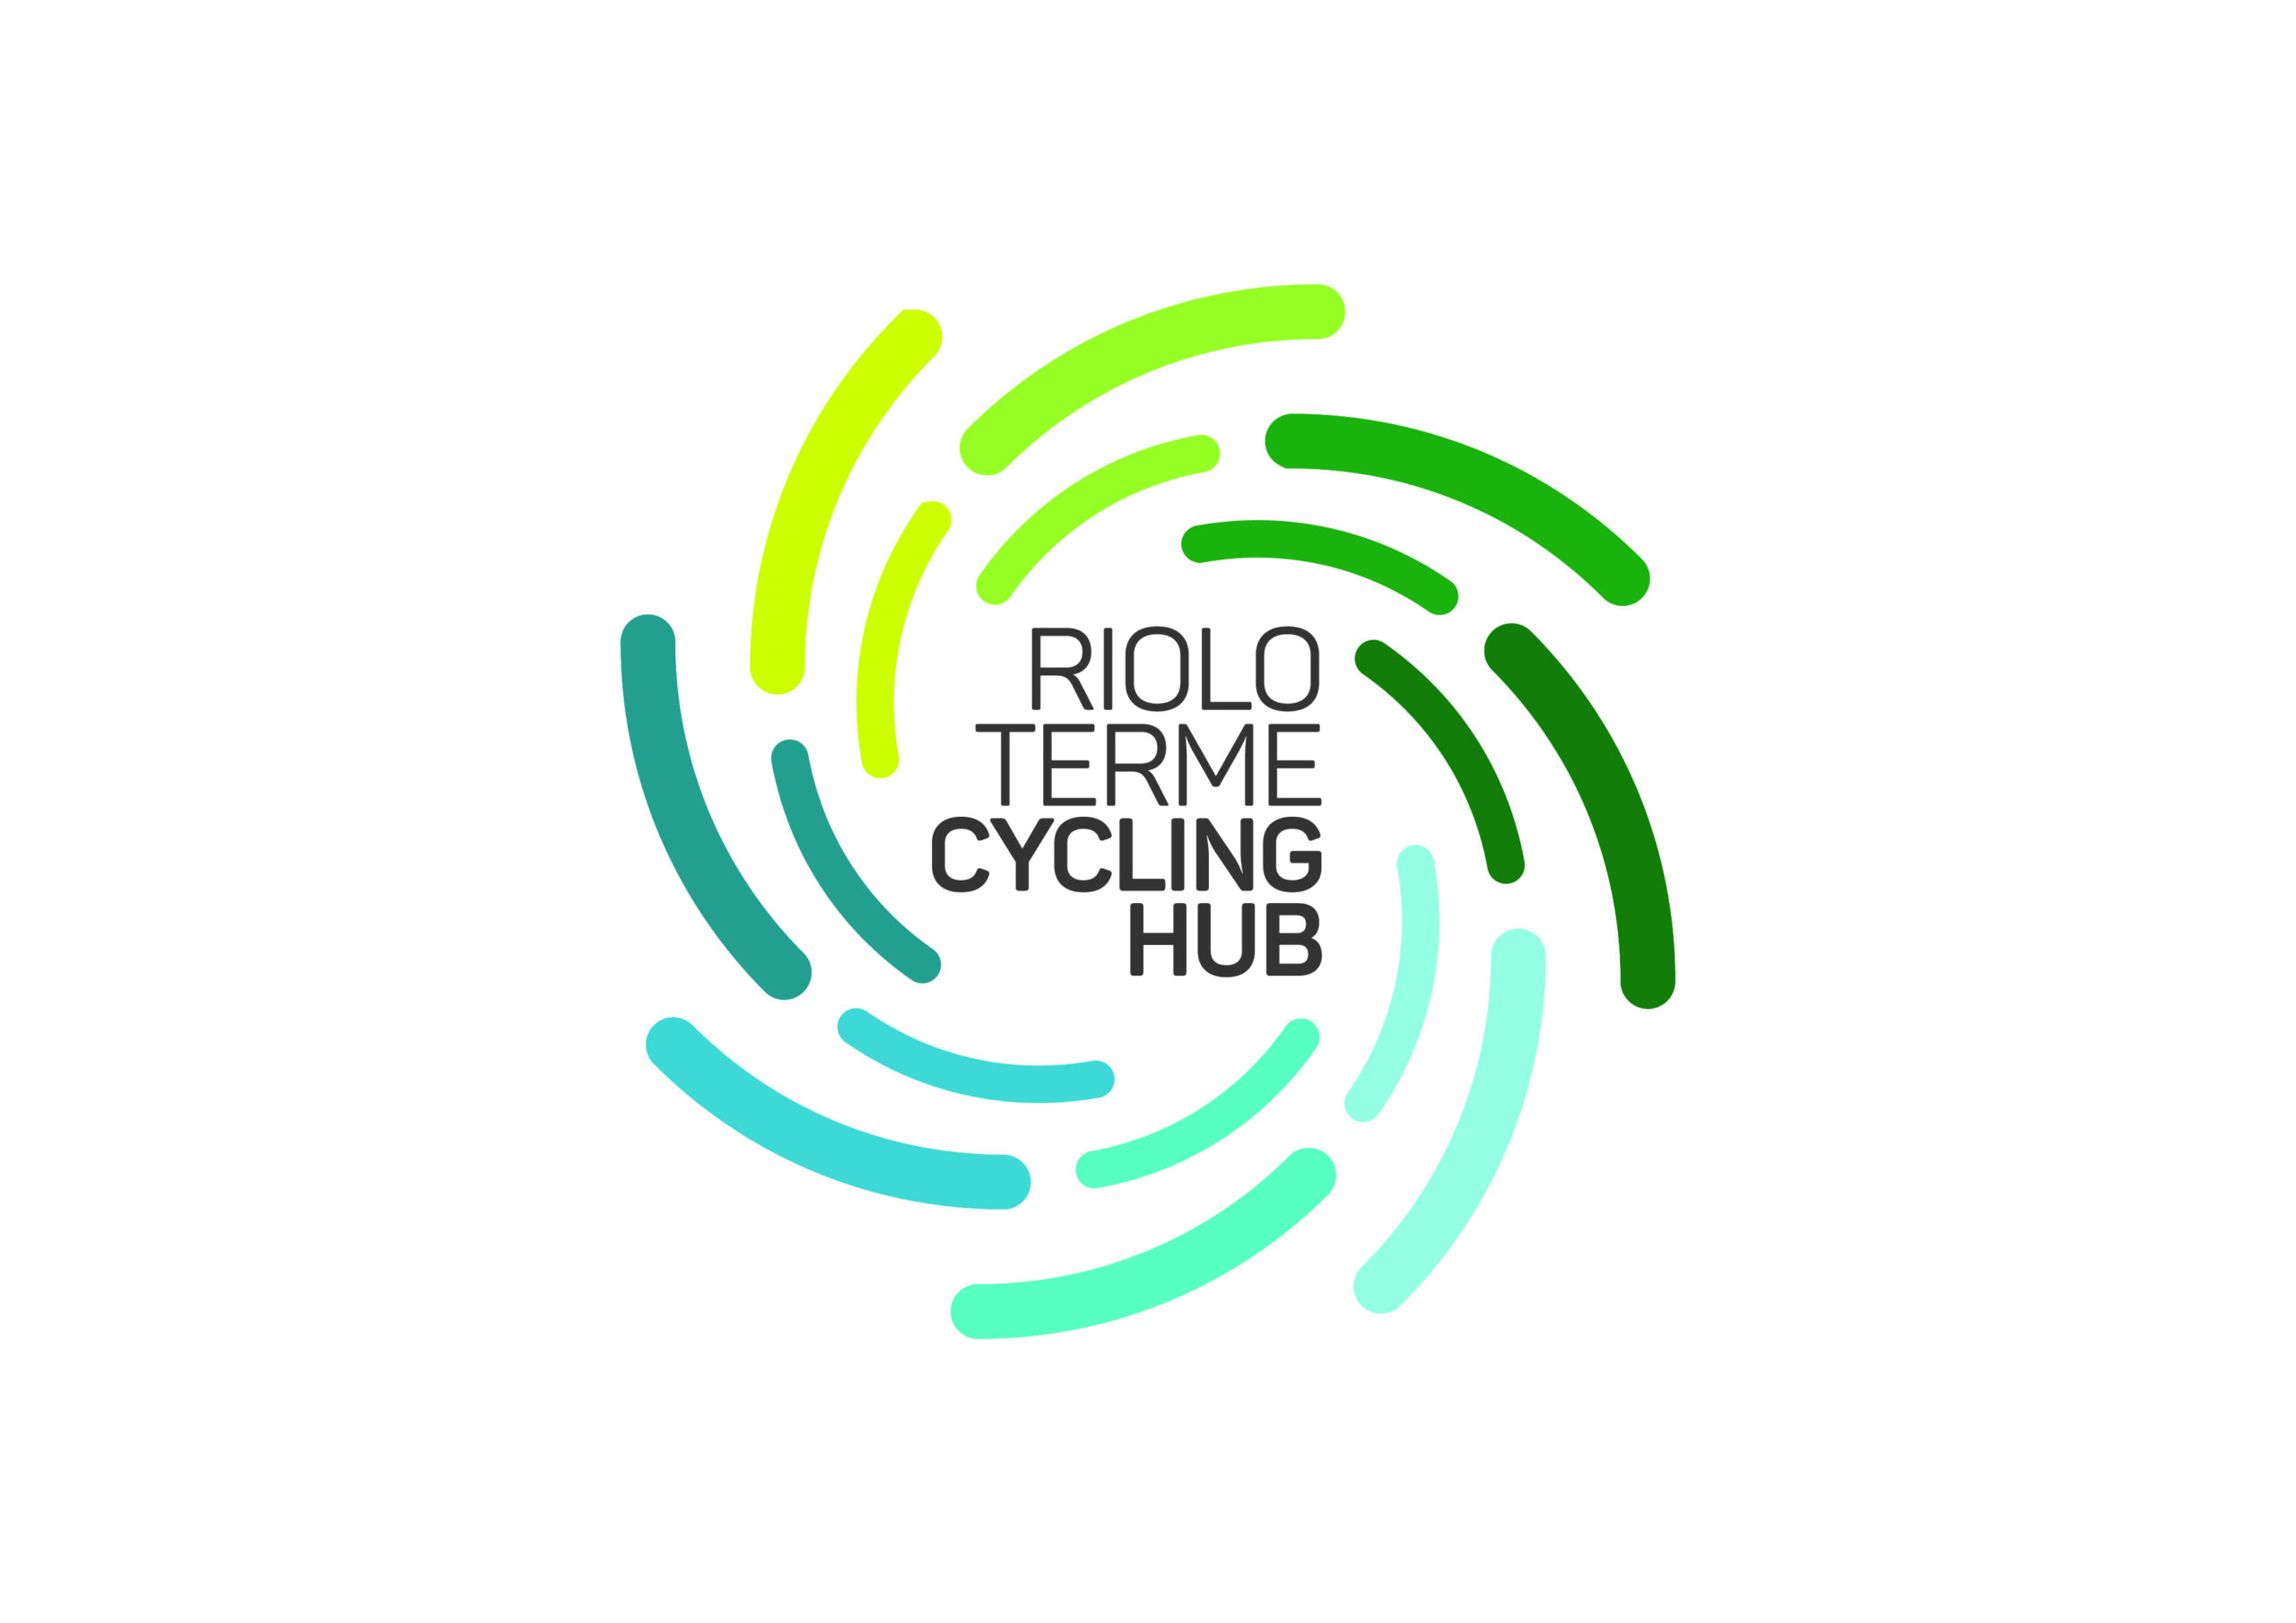 RioloTermeCyclingHub_logo colore